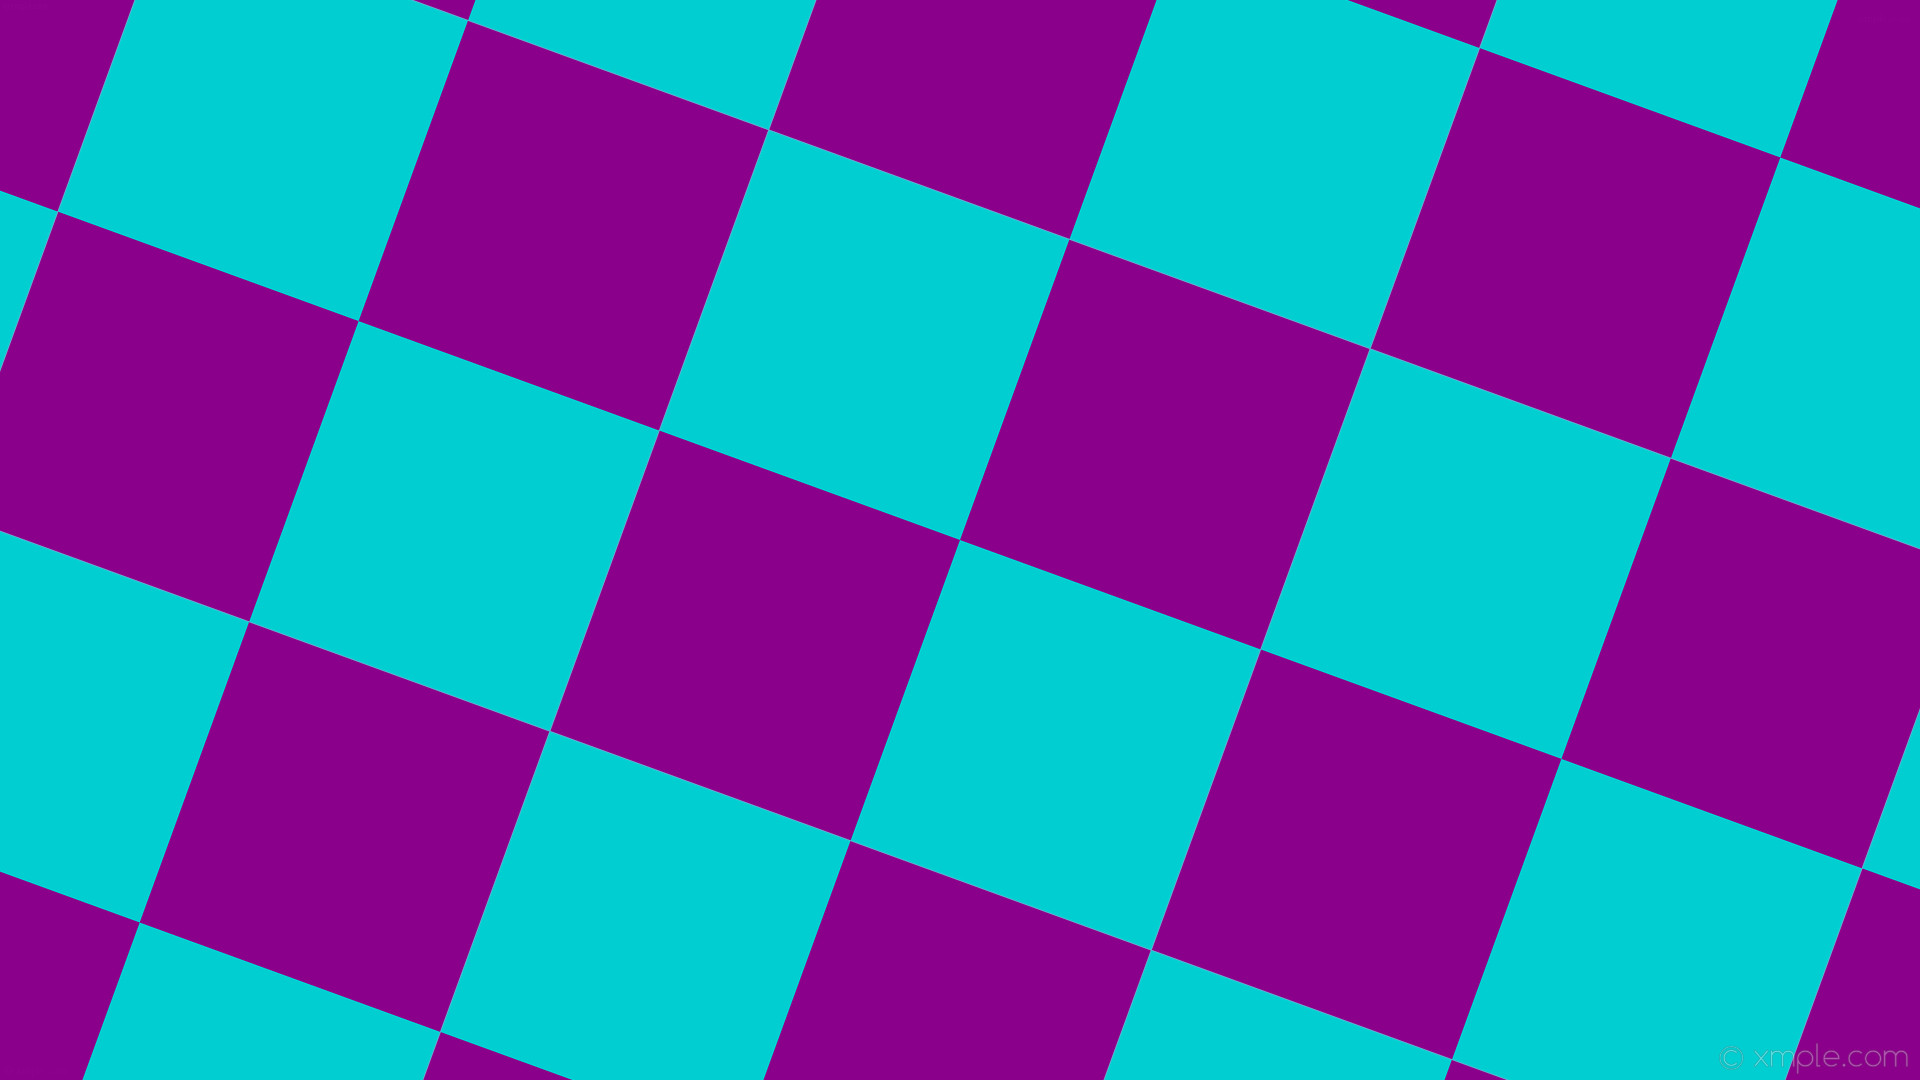 1920x1080 wallpaper checkered purple squares blue dark magenta dark turquoise #8b008b  #00ced1 diagonal 70Â°